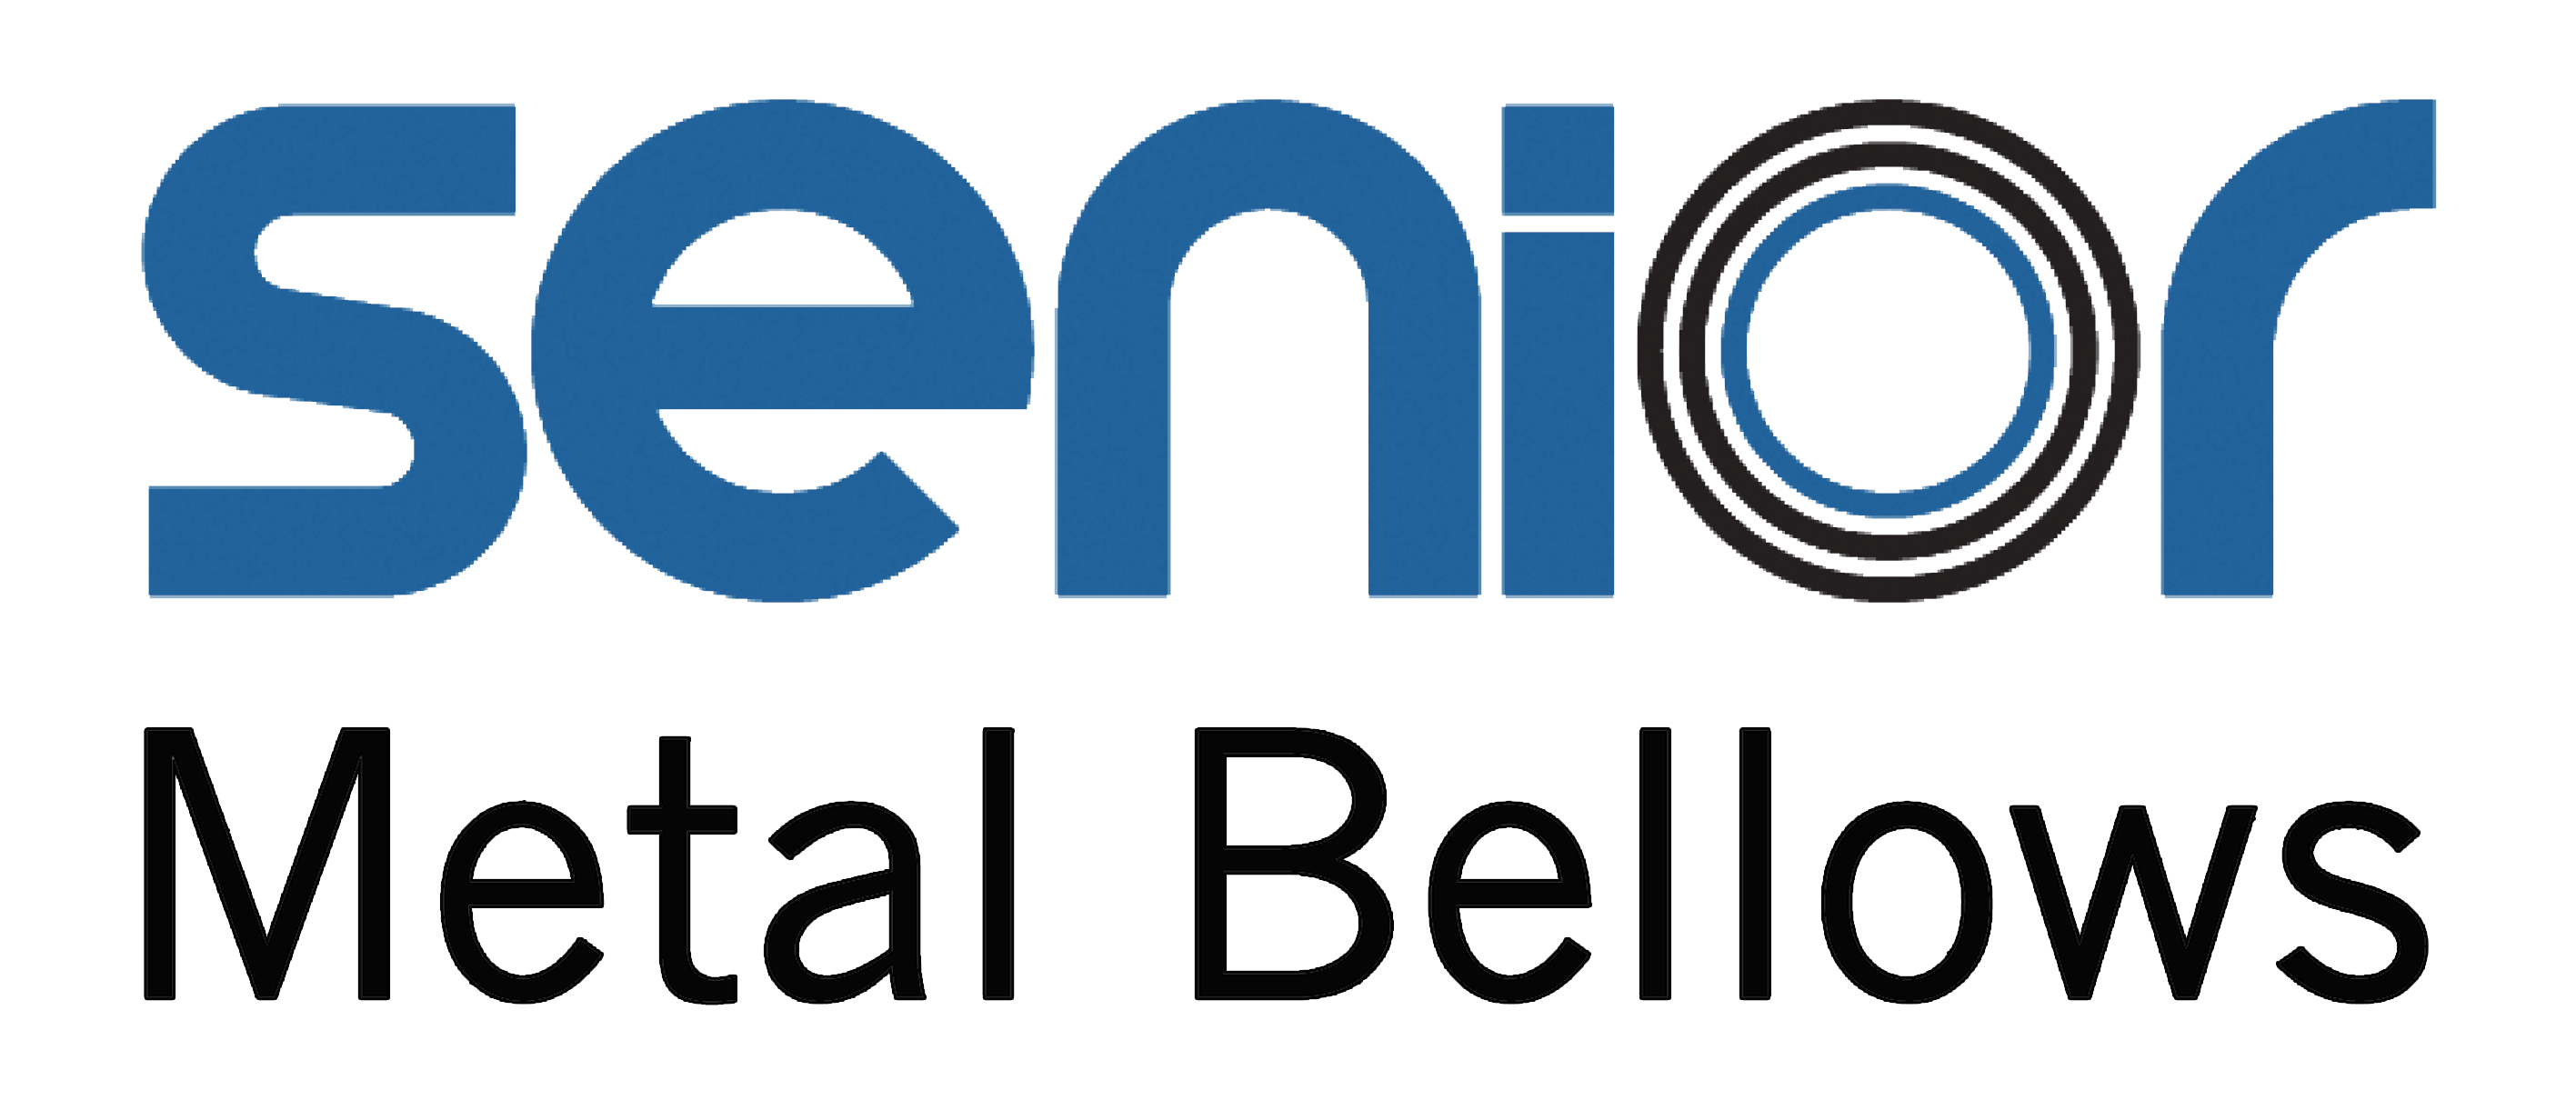 Senior Aerospace Metal Bellows Logo